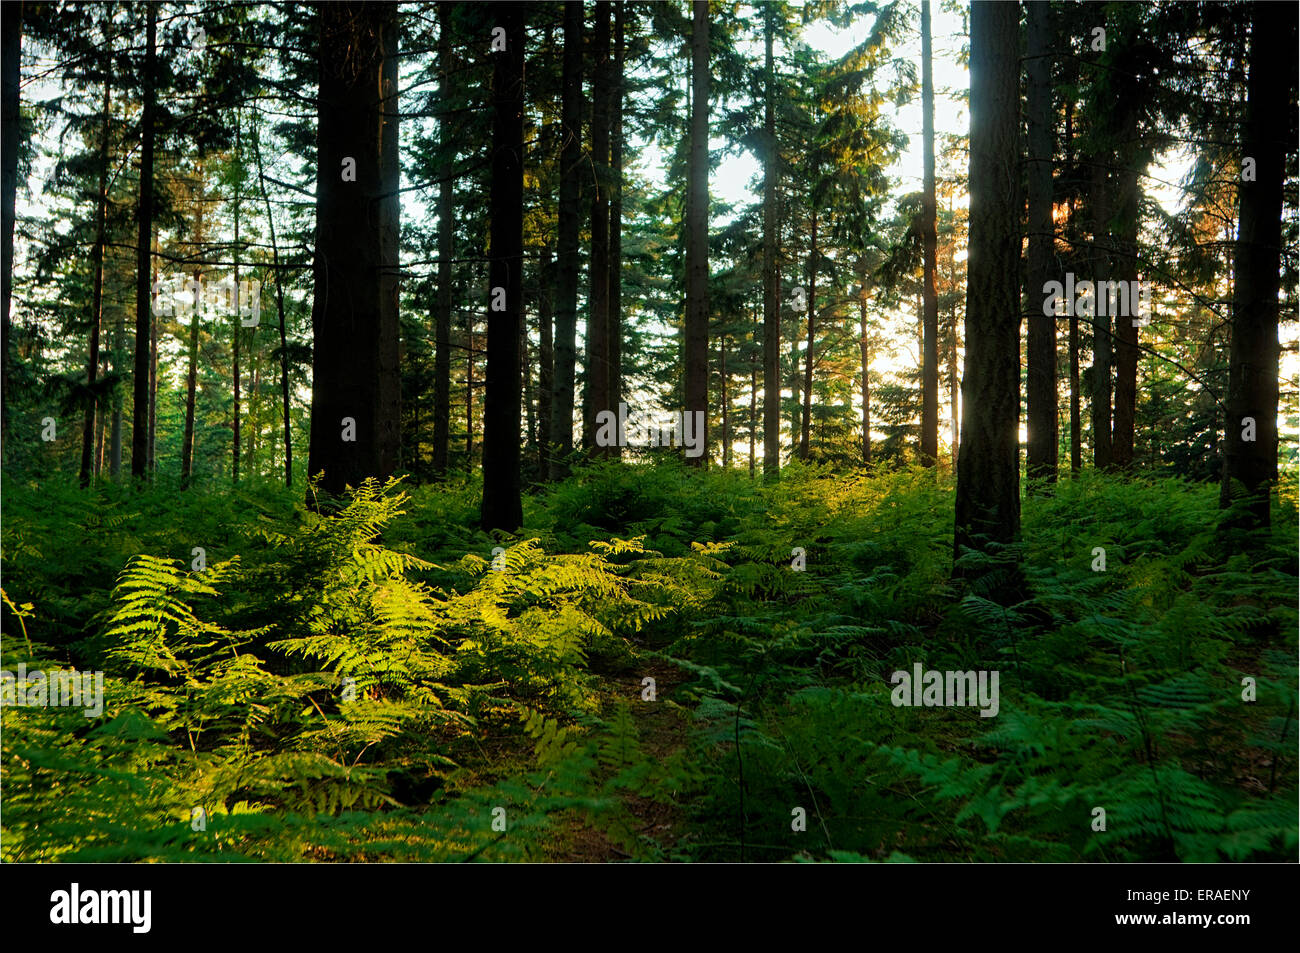 Conifer forest with fern (Osmunda regalis) Stock Photo